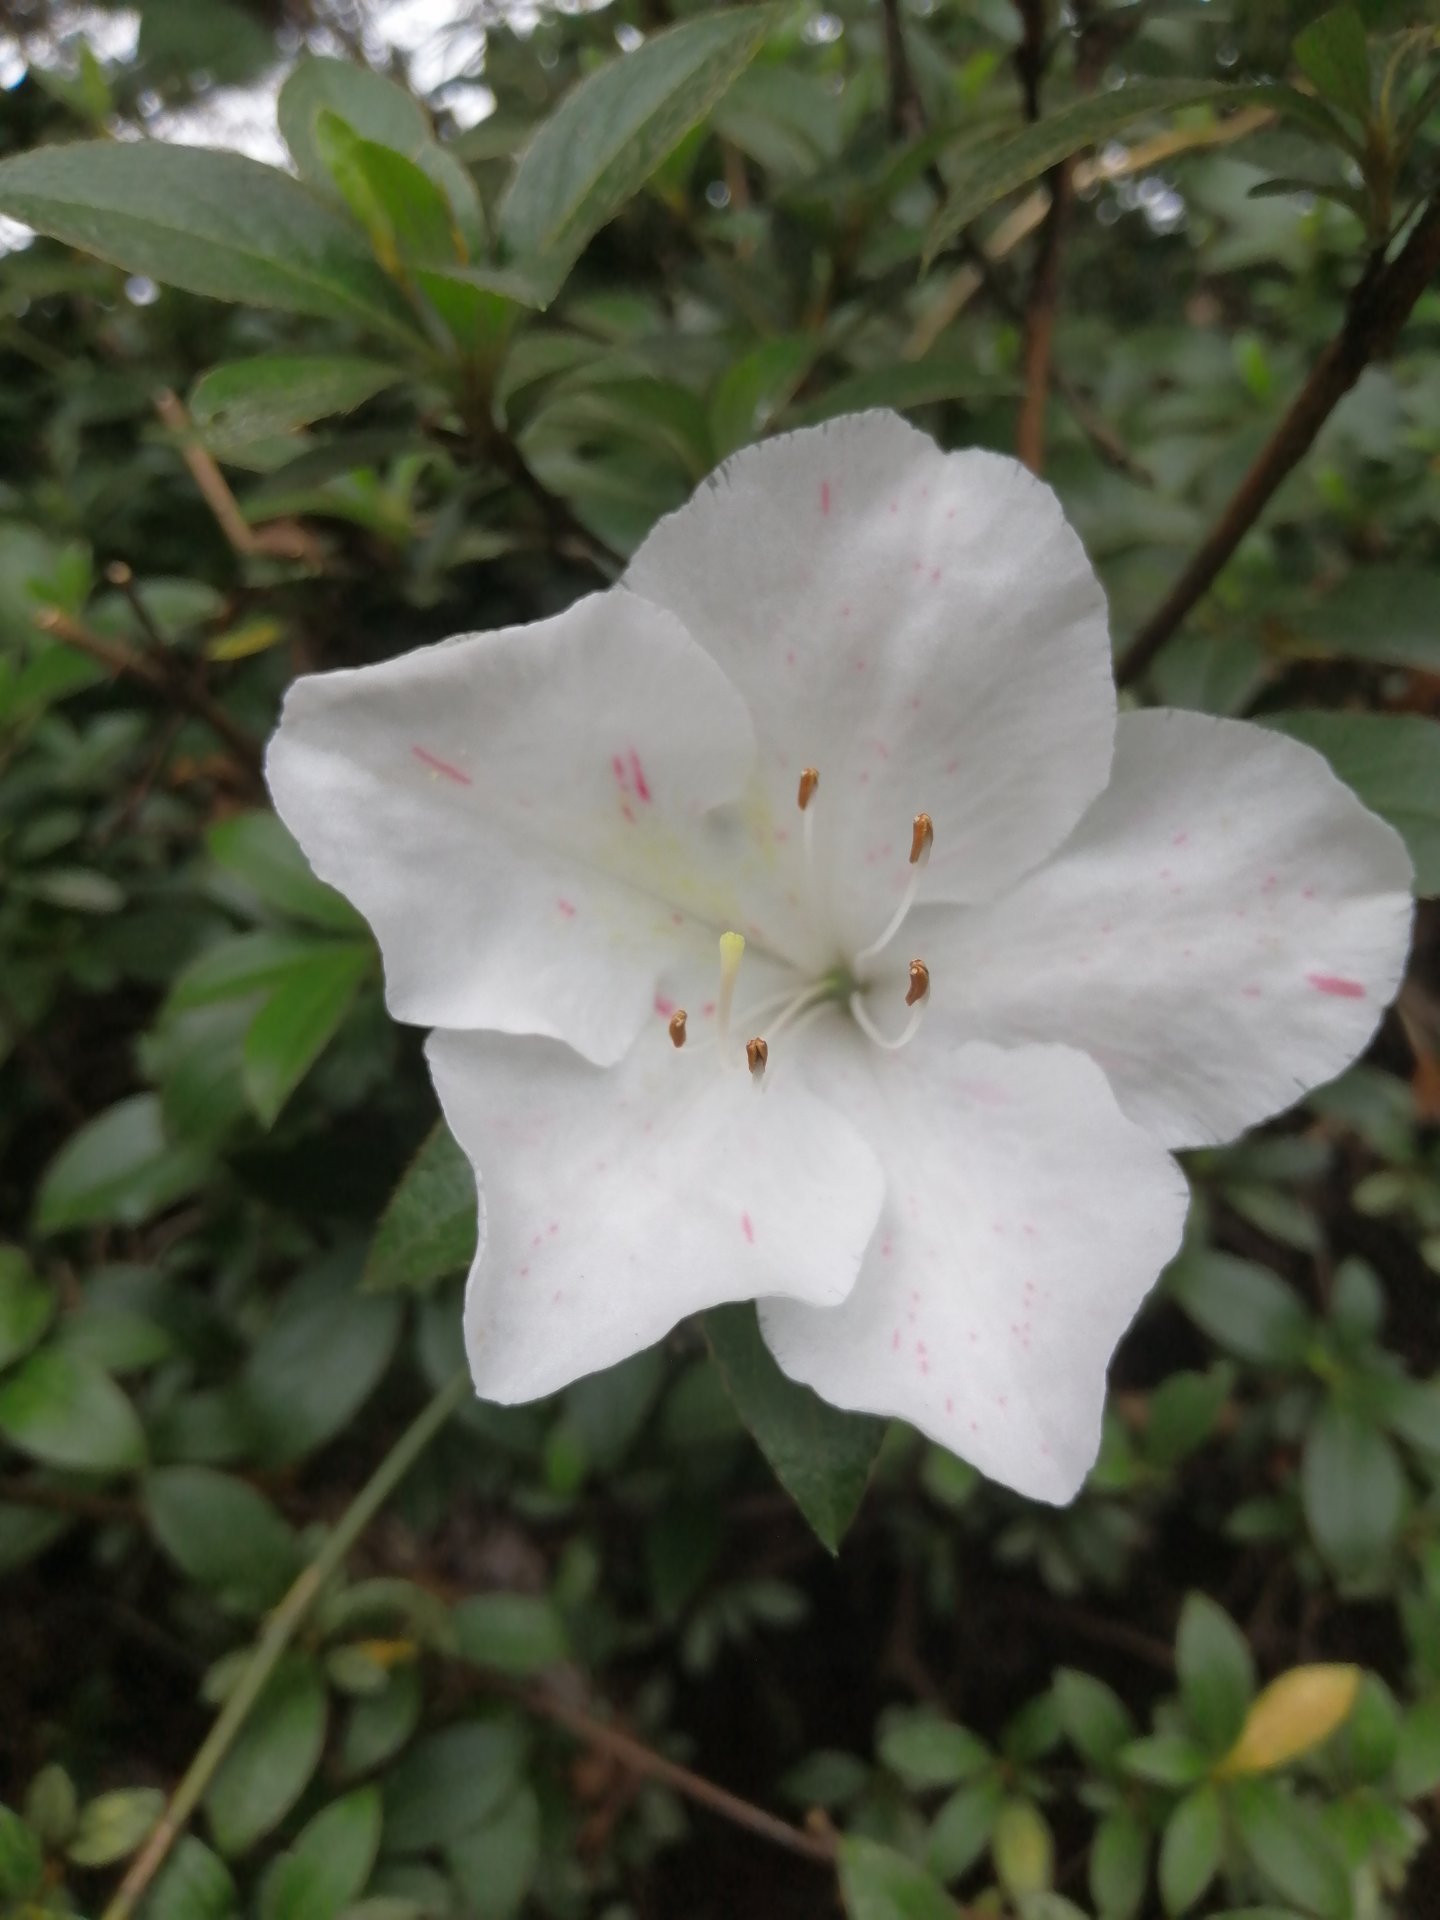 White rodedendron flower